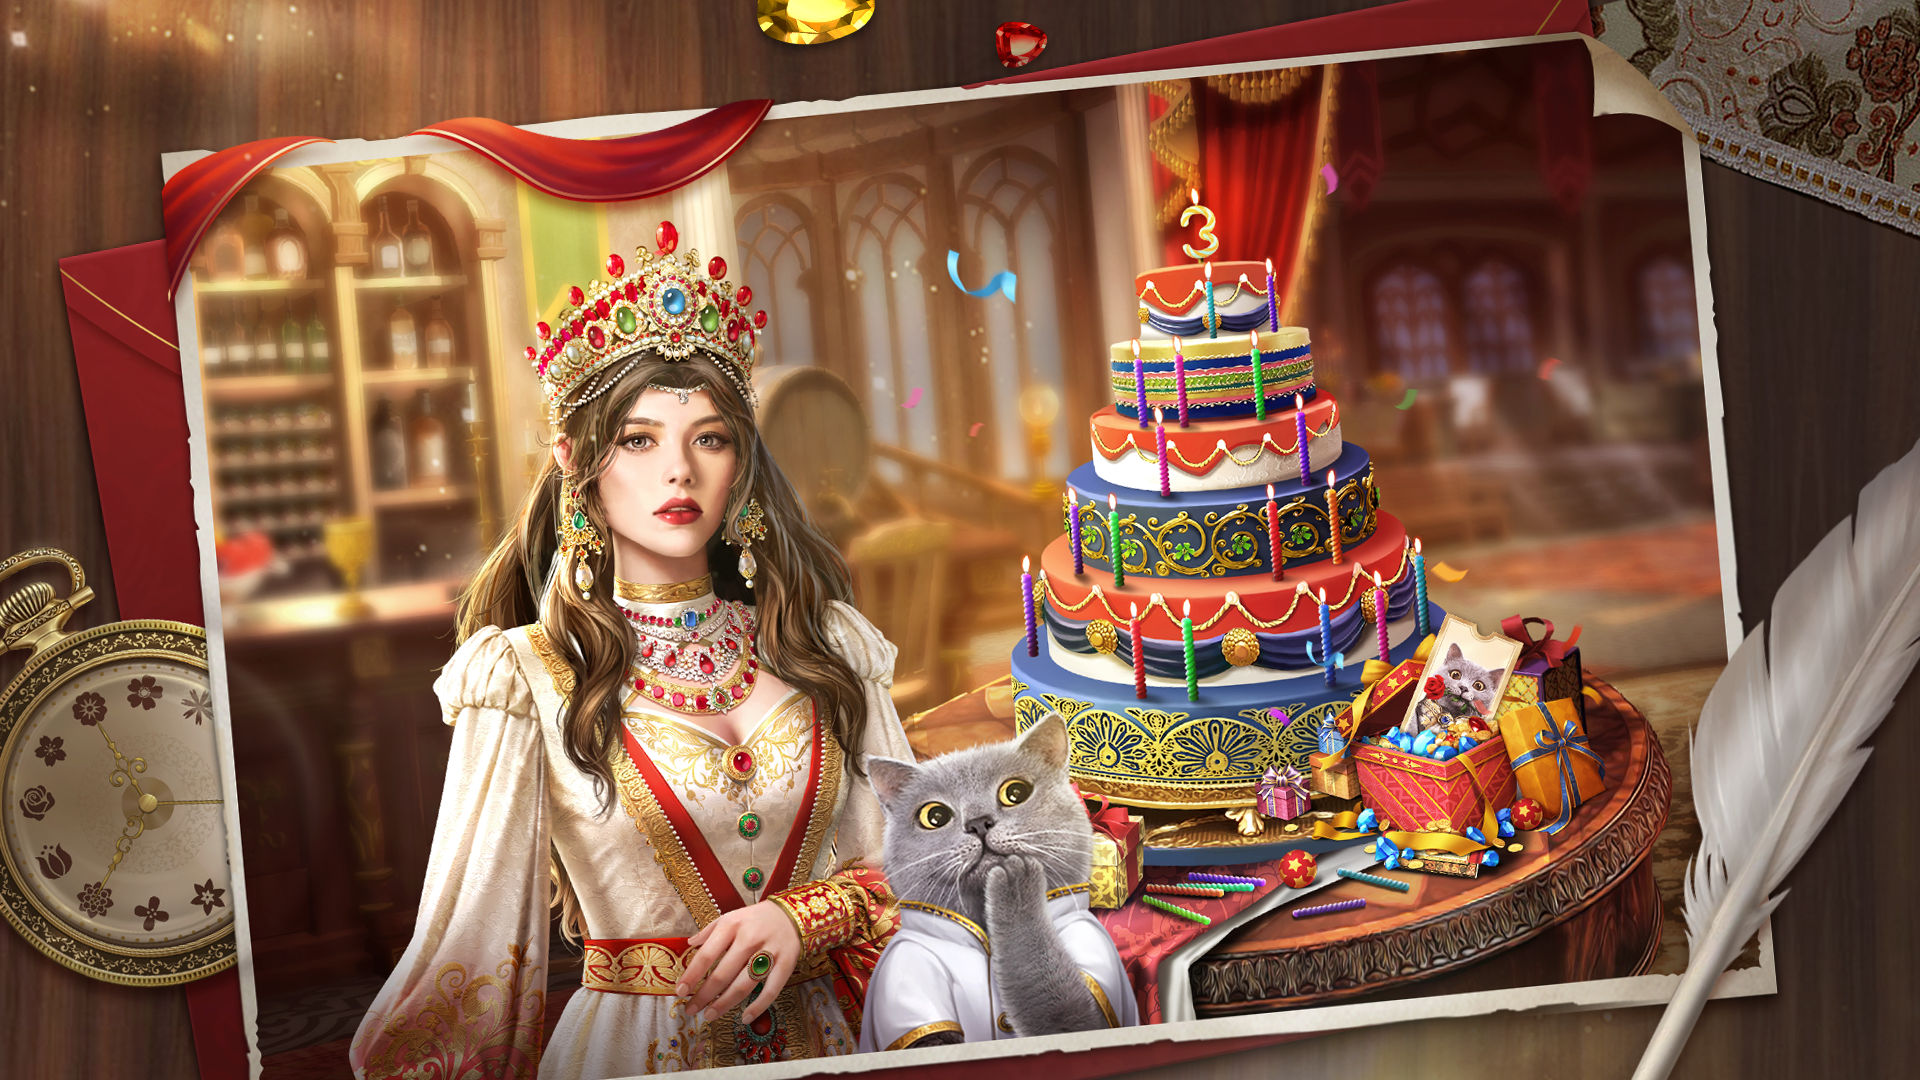 Game of Sultans – popular empire simulation game celebrates its third